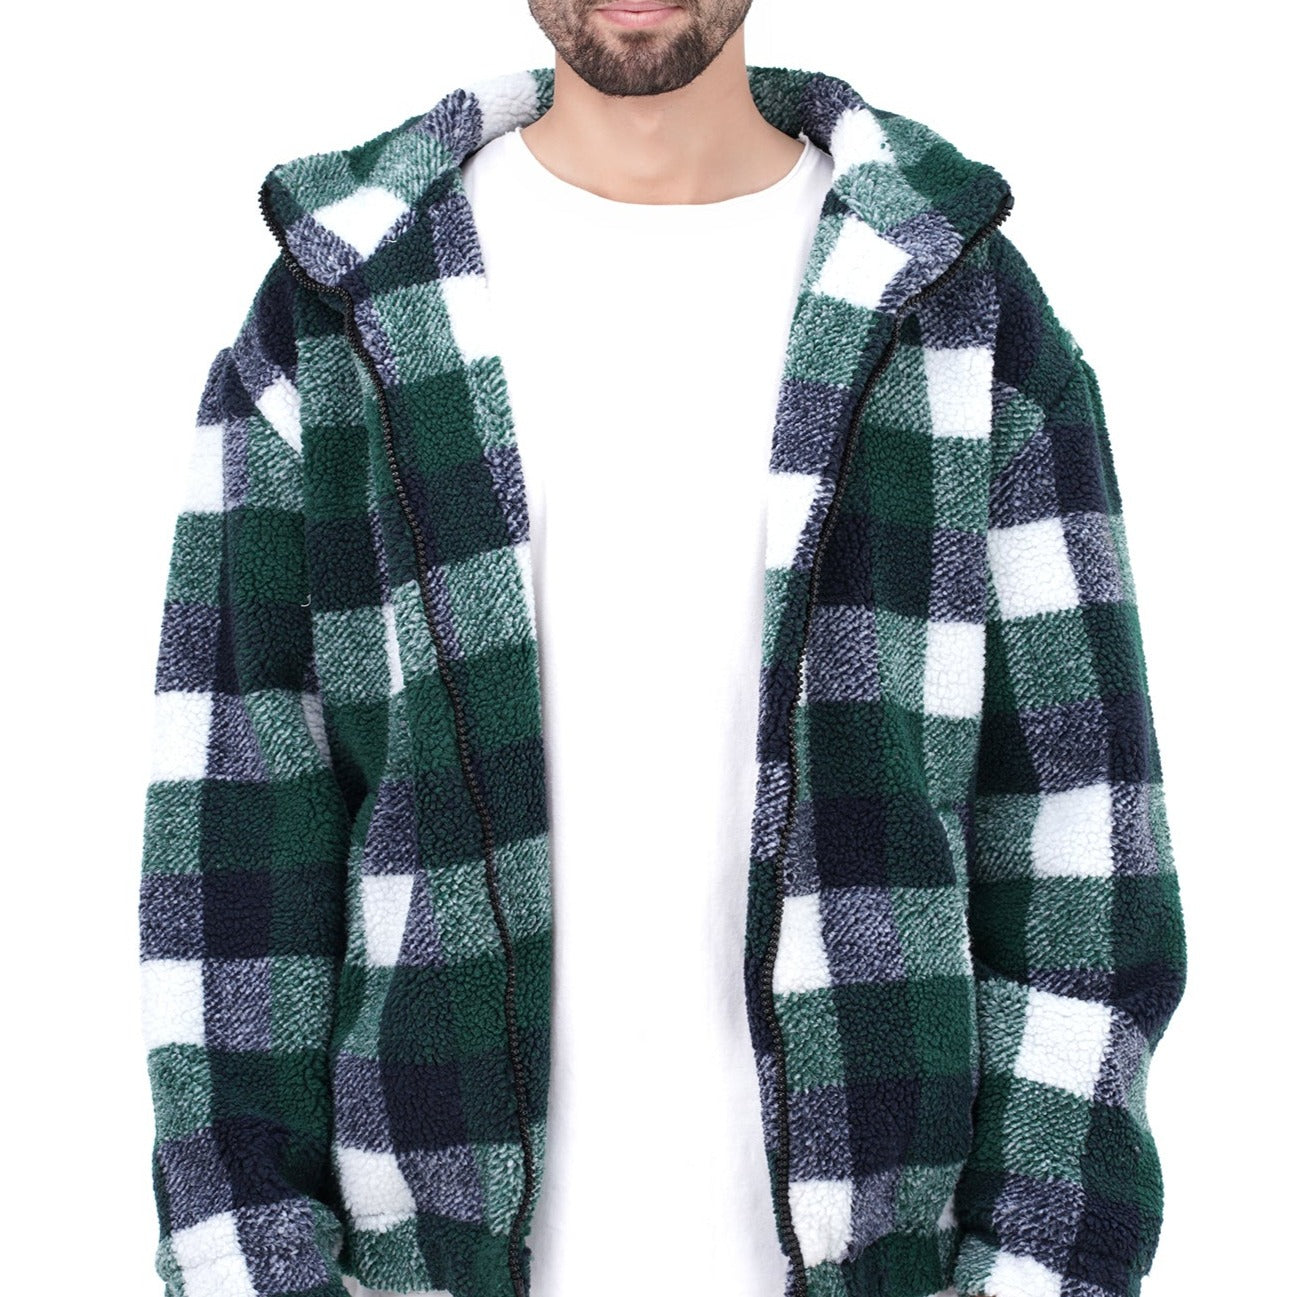 M24GA027-a men's jacket made of fur material with a zipper